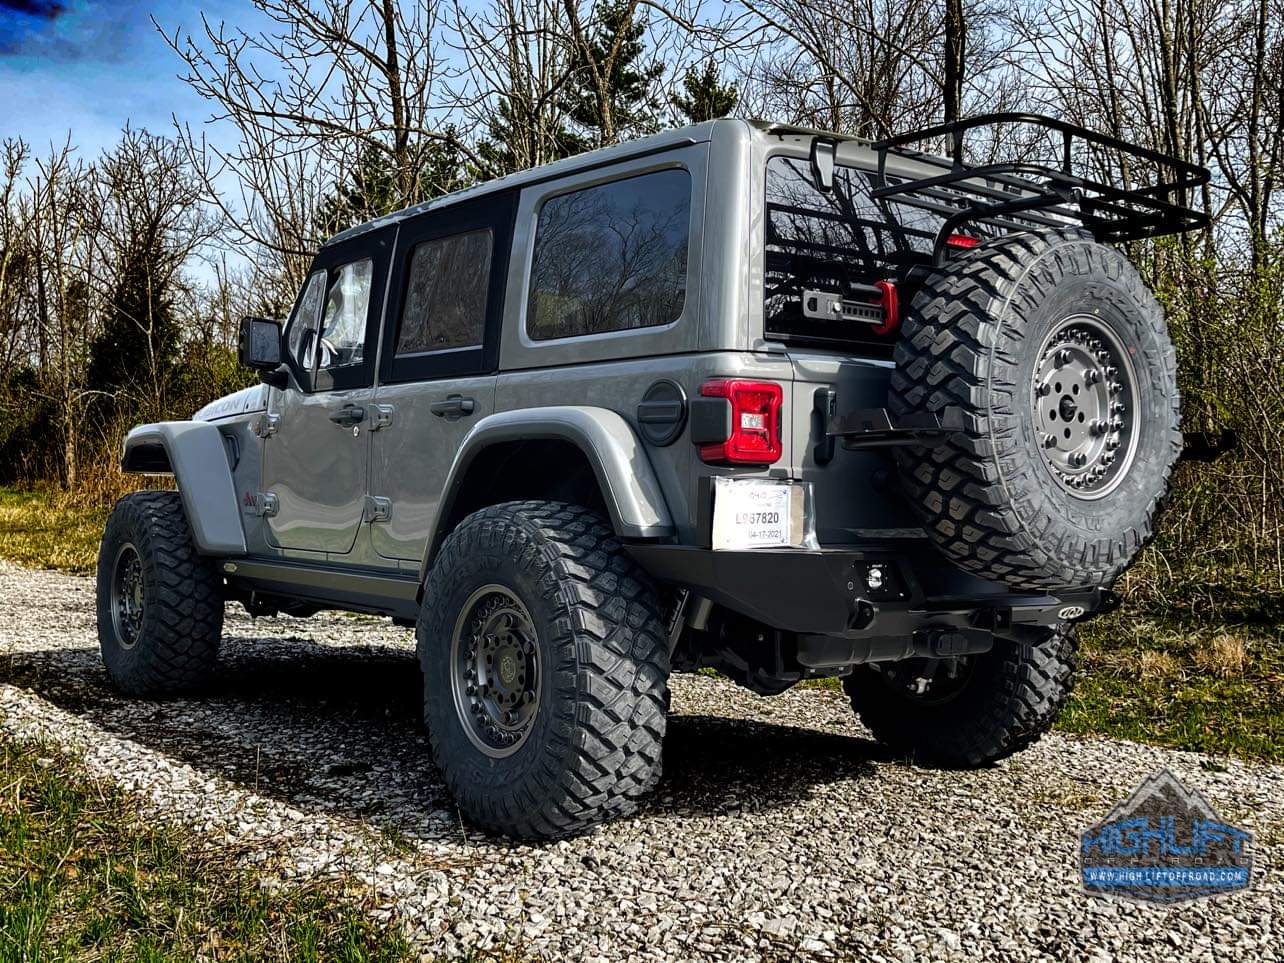 2021 Sing Gray Rubicon Diesel Build | Jeep Wrangler Forum